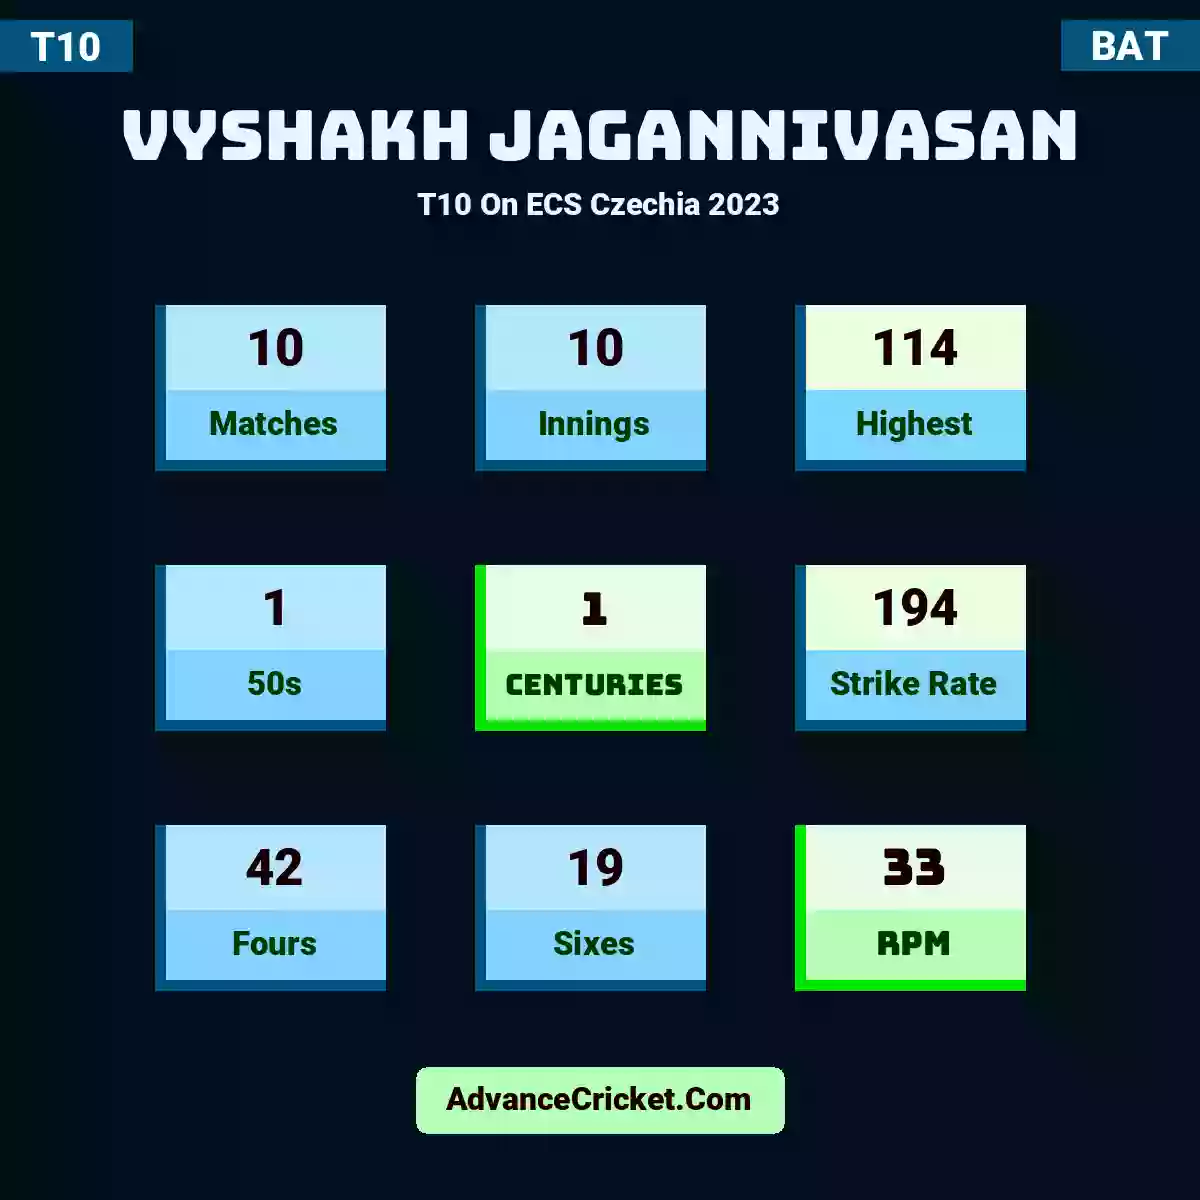 Vyshakh Jagannivasan T10  On ECS Czechia 2023, Vyshakh Jagannivasan played 10 matches, scored 114 runs as highest, 1 half-centuries, and 1 centuries, with a strike rate of 194. V.Jagannivasan hit 42 fours and 19 sixes, with an RPM of 33.